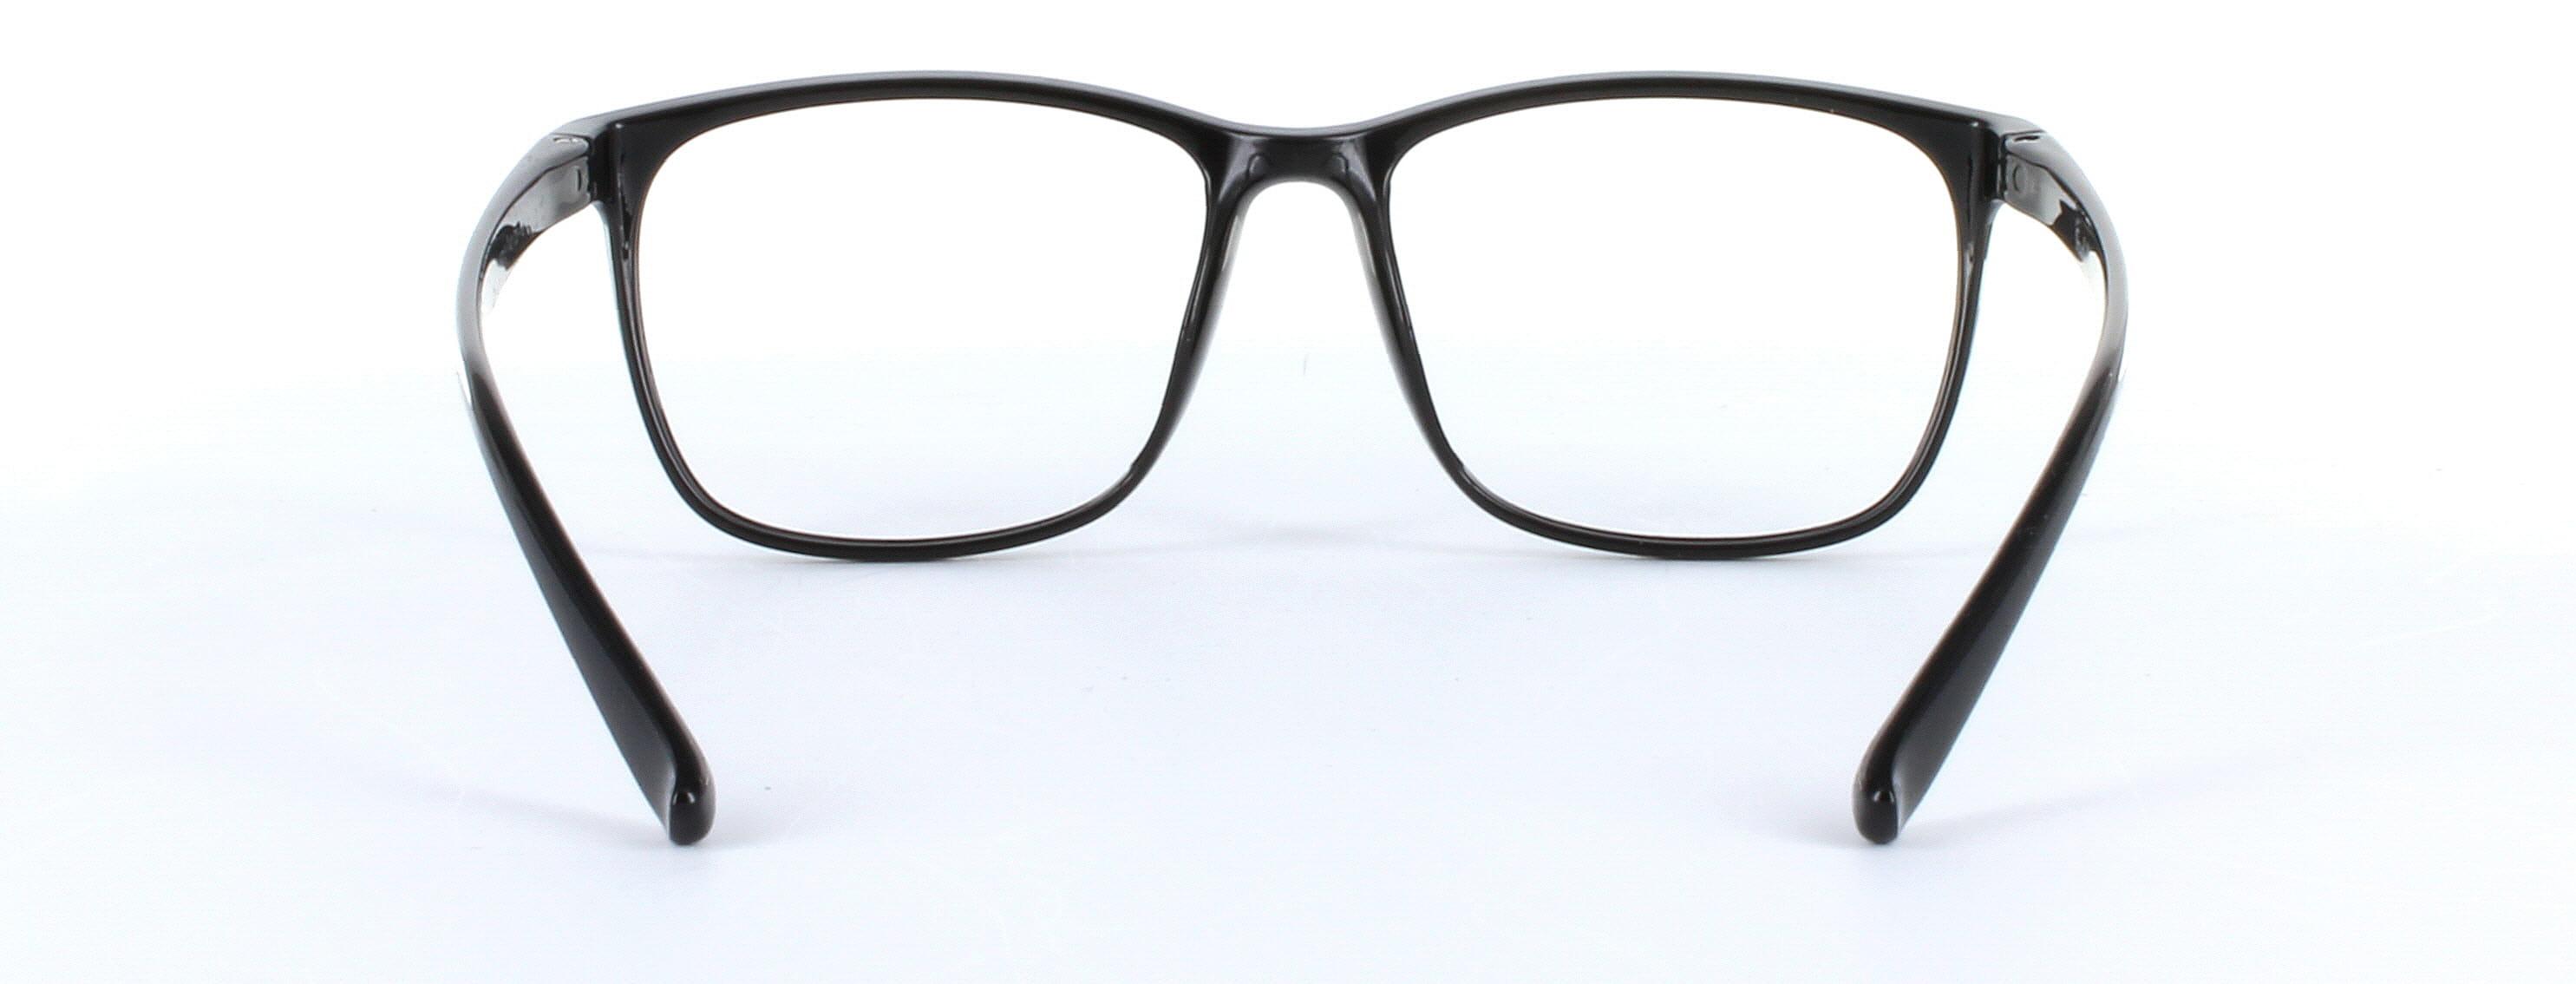 Ocushield Parker Black Full Rim Anti Blue Light Glasses - Image View 3